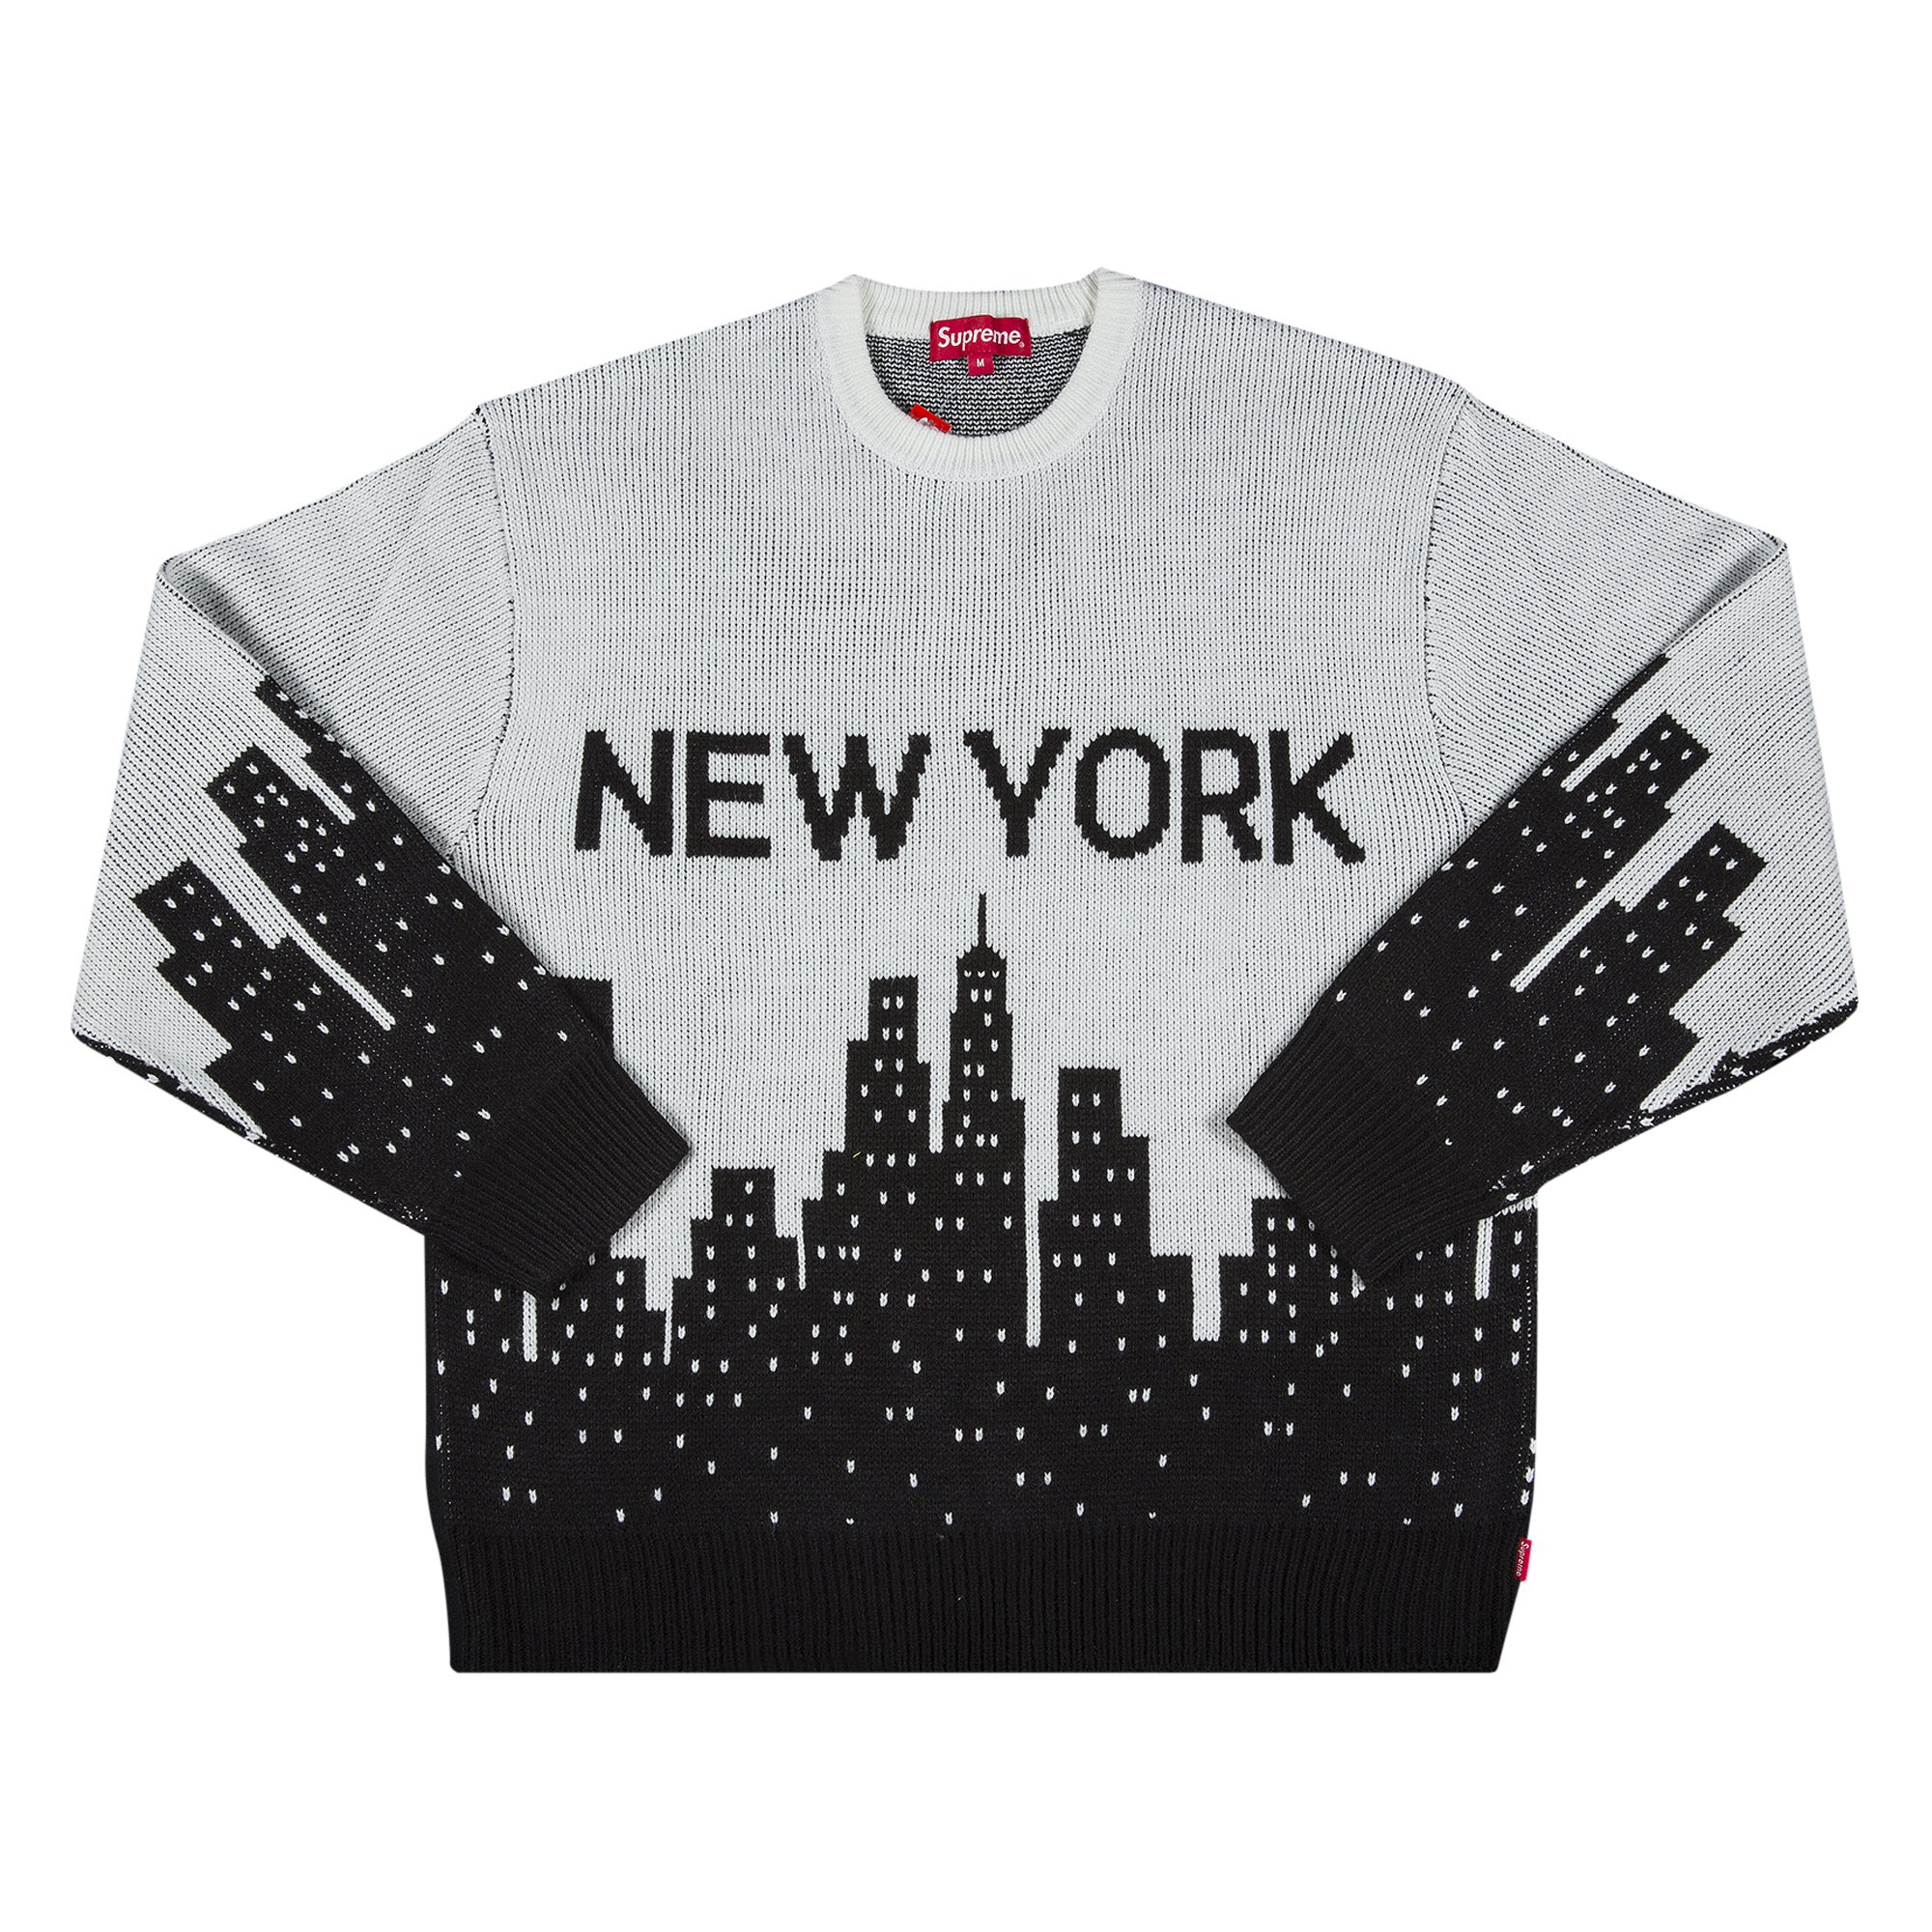 supreme NEW york sweater white S